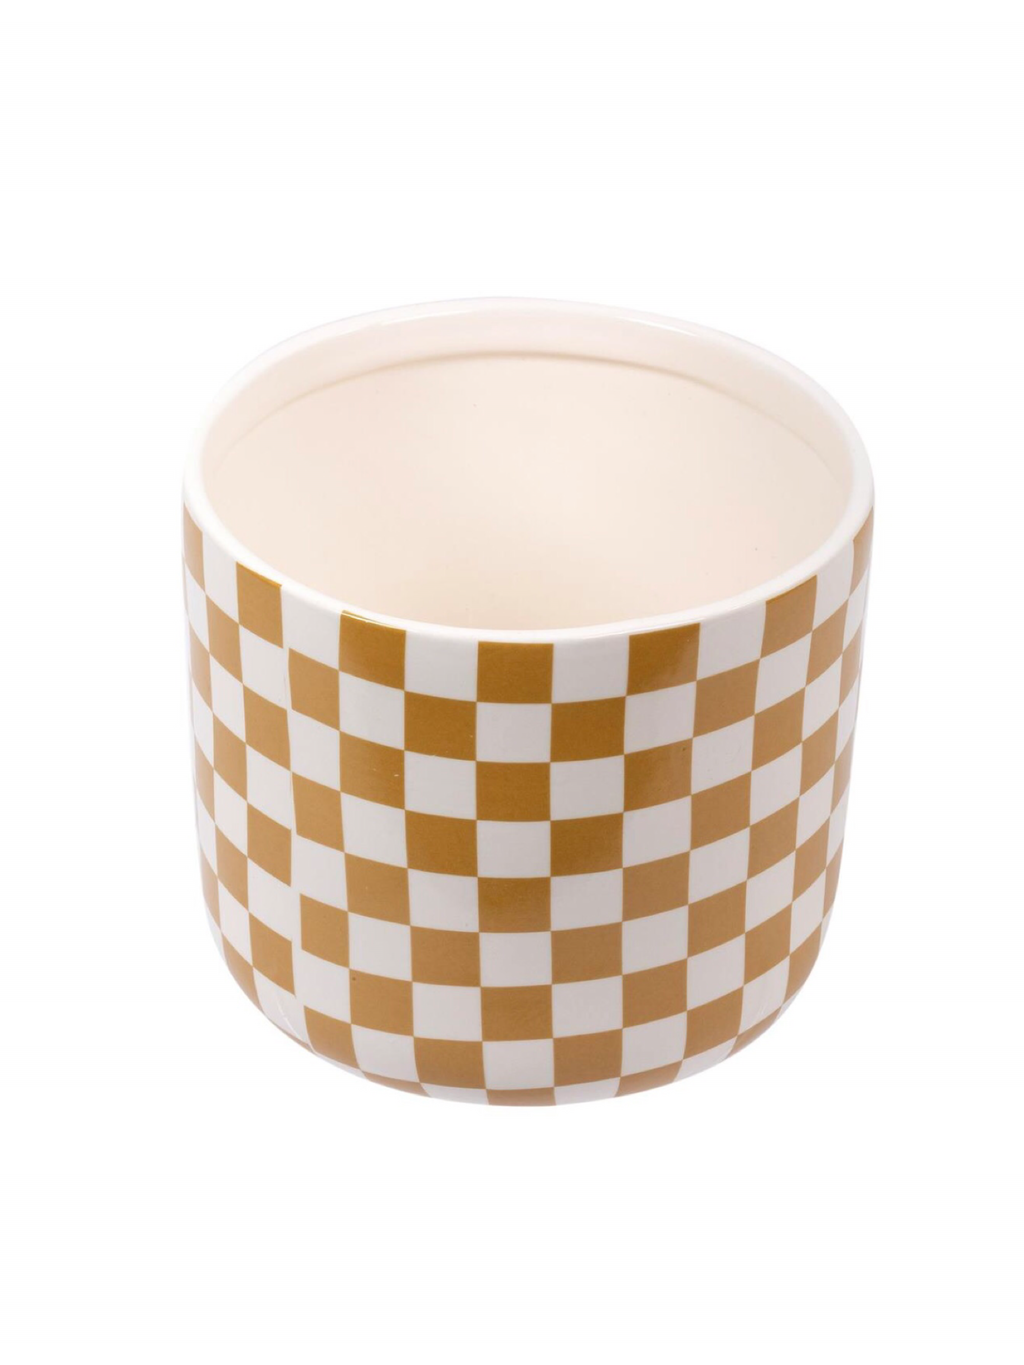 Checkered Ceramic Planter